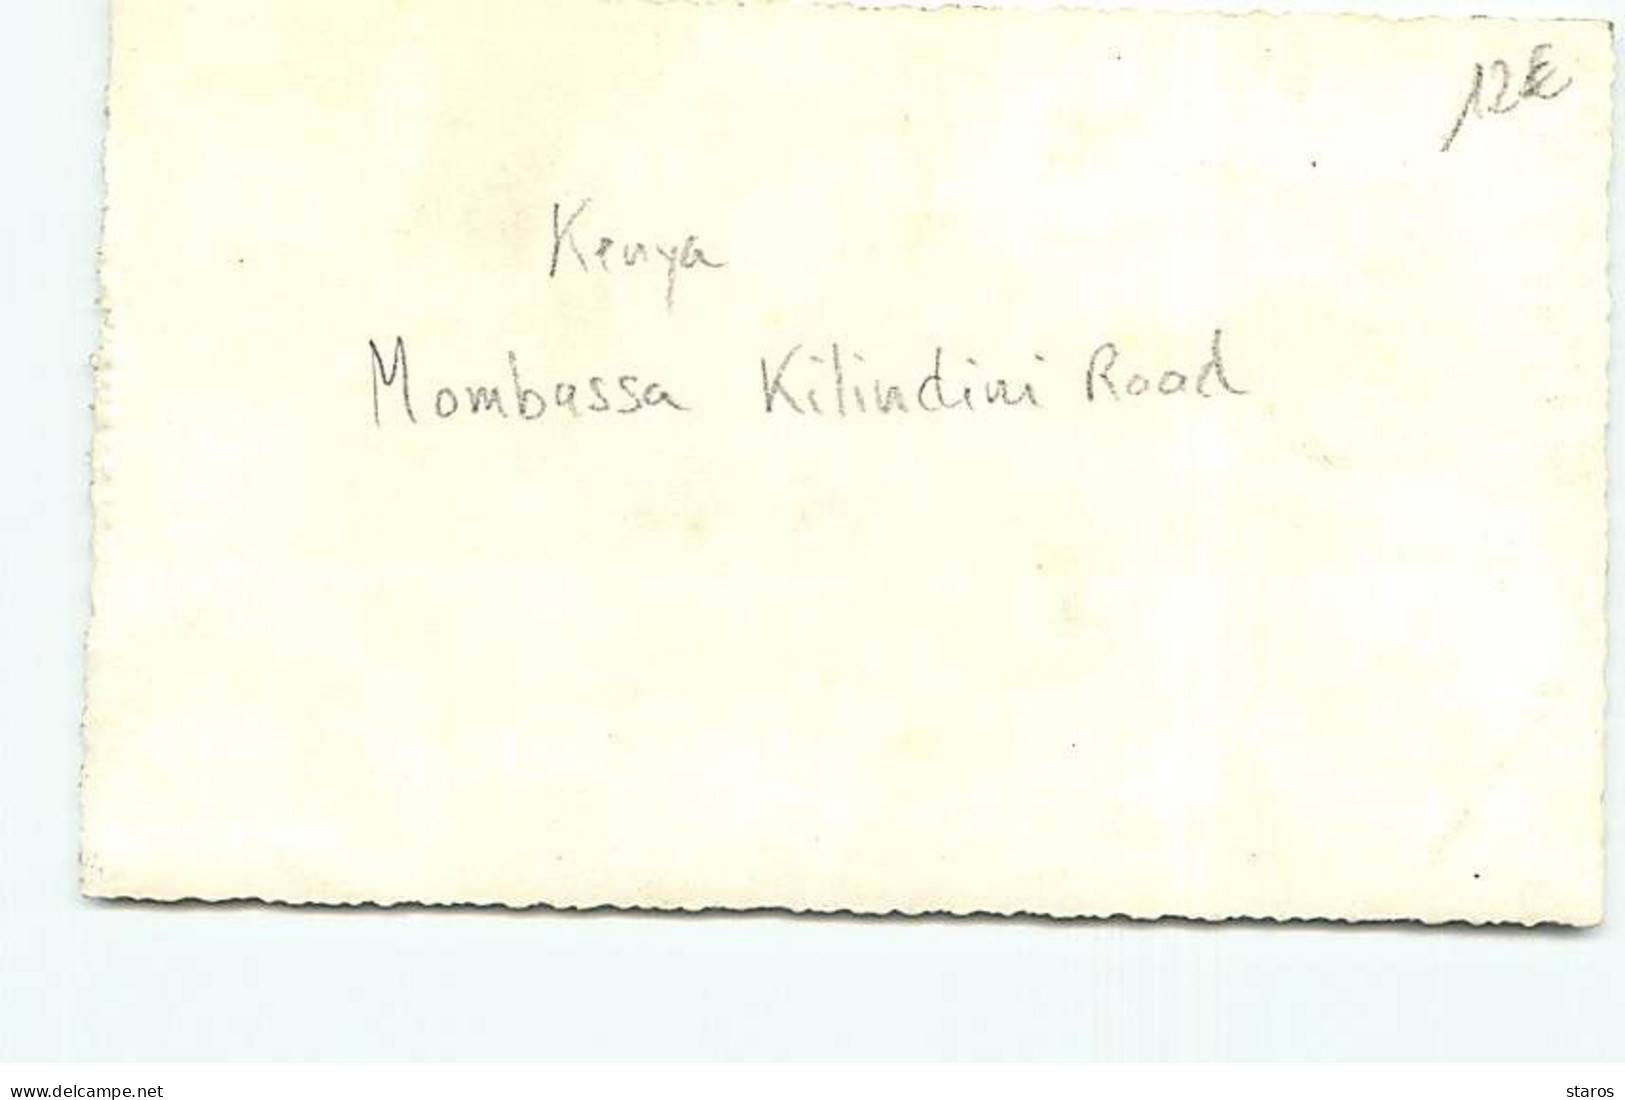 Kenya - MONBASSA - Kilindini Road - Kenya